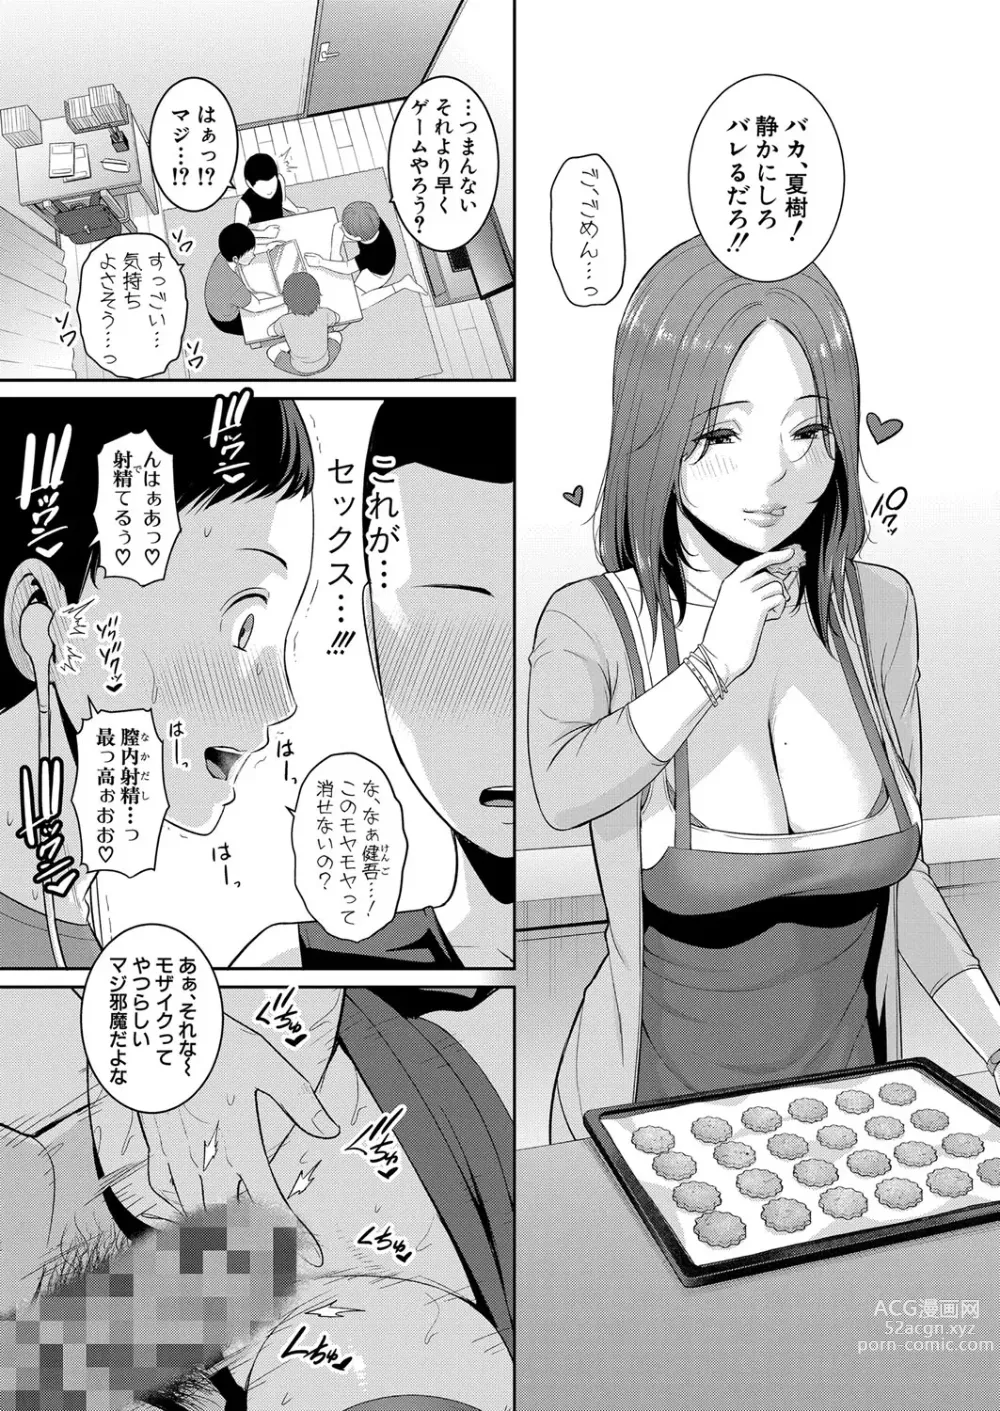 Page 7 of manga Shin Tomodachi no Hahaoya Ch. 1-8